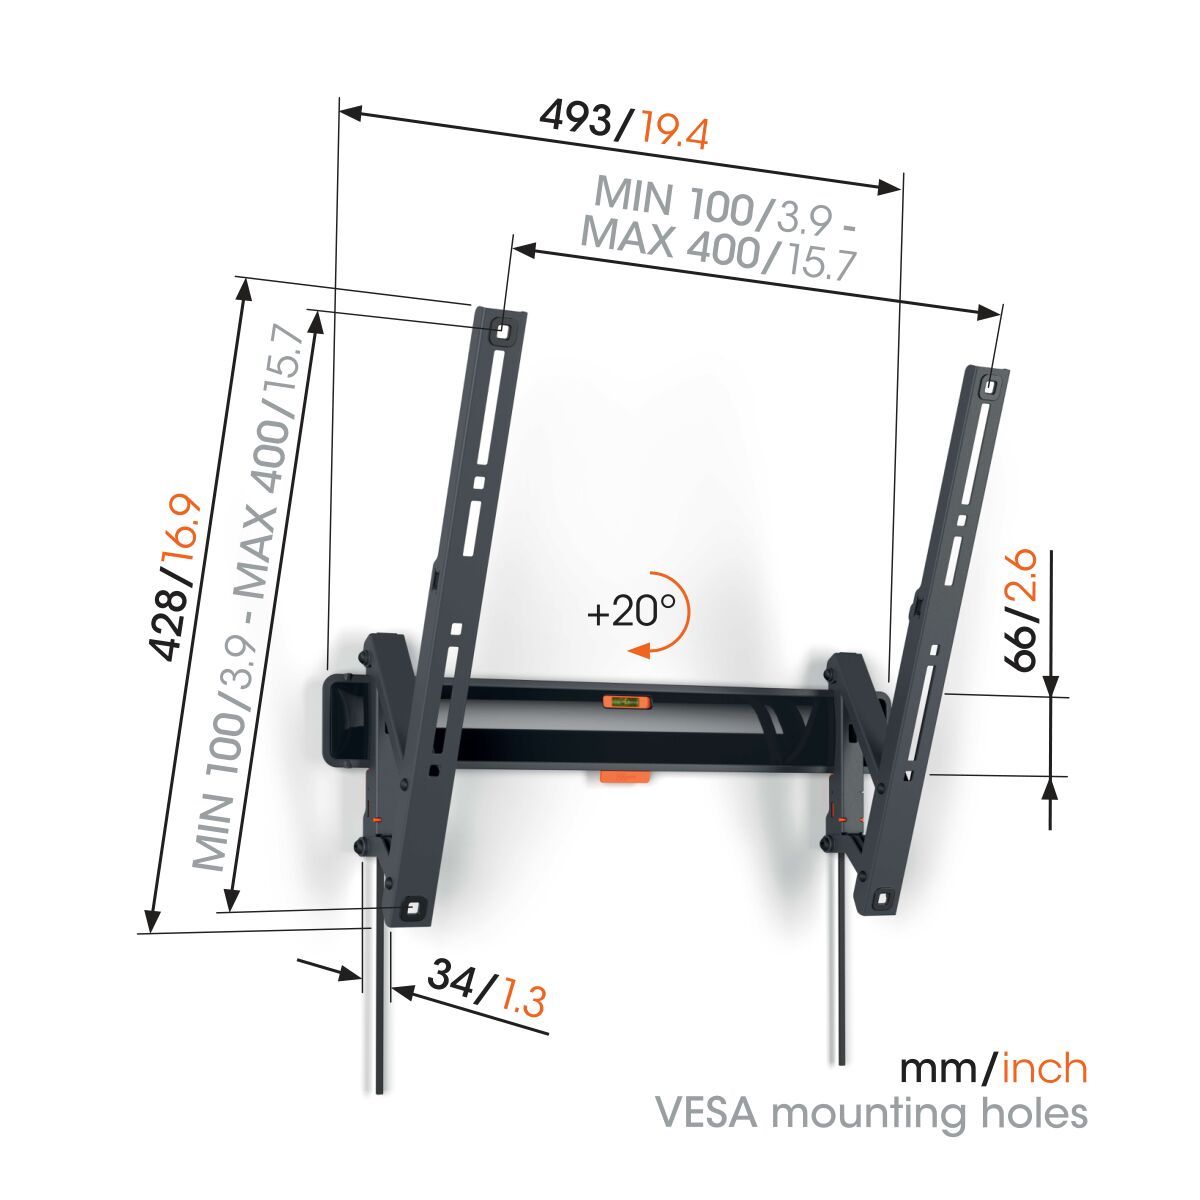 Vogel's TVM 3413 Tilting TV Wall Mount - Suitable for 32 up to 65 inch TVs - Tilt up to 20° - Dimensions